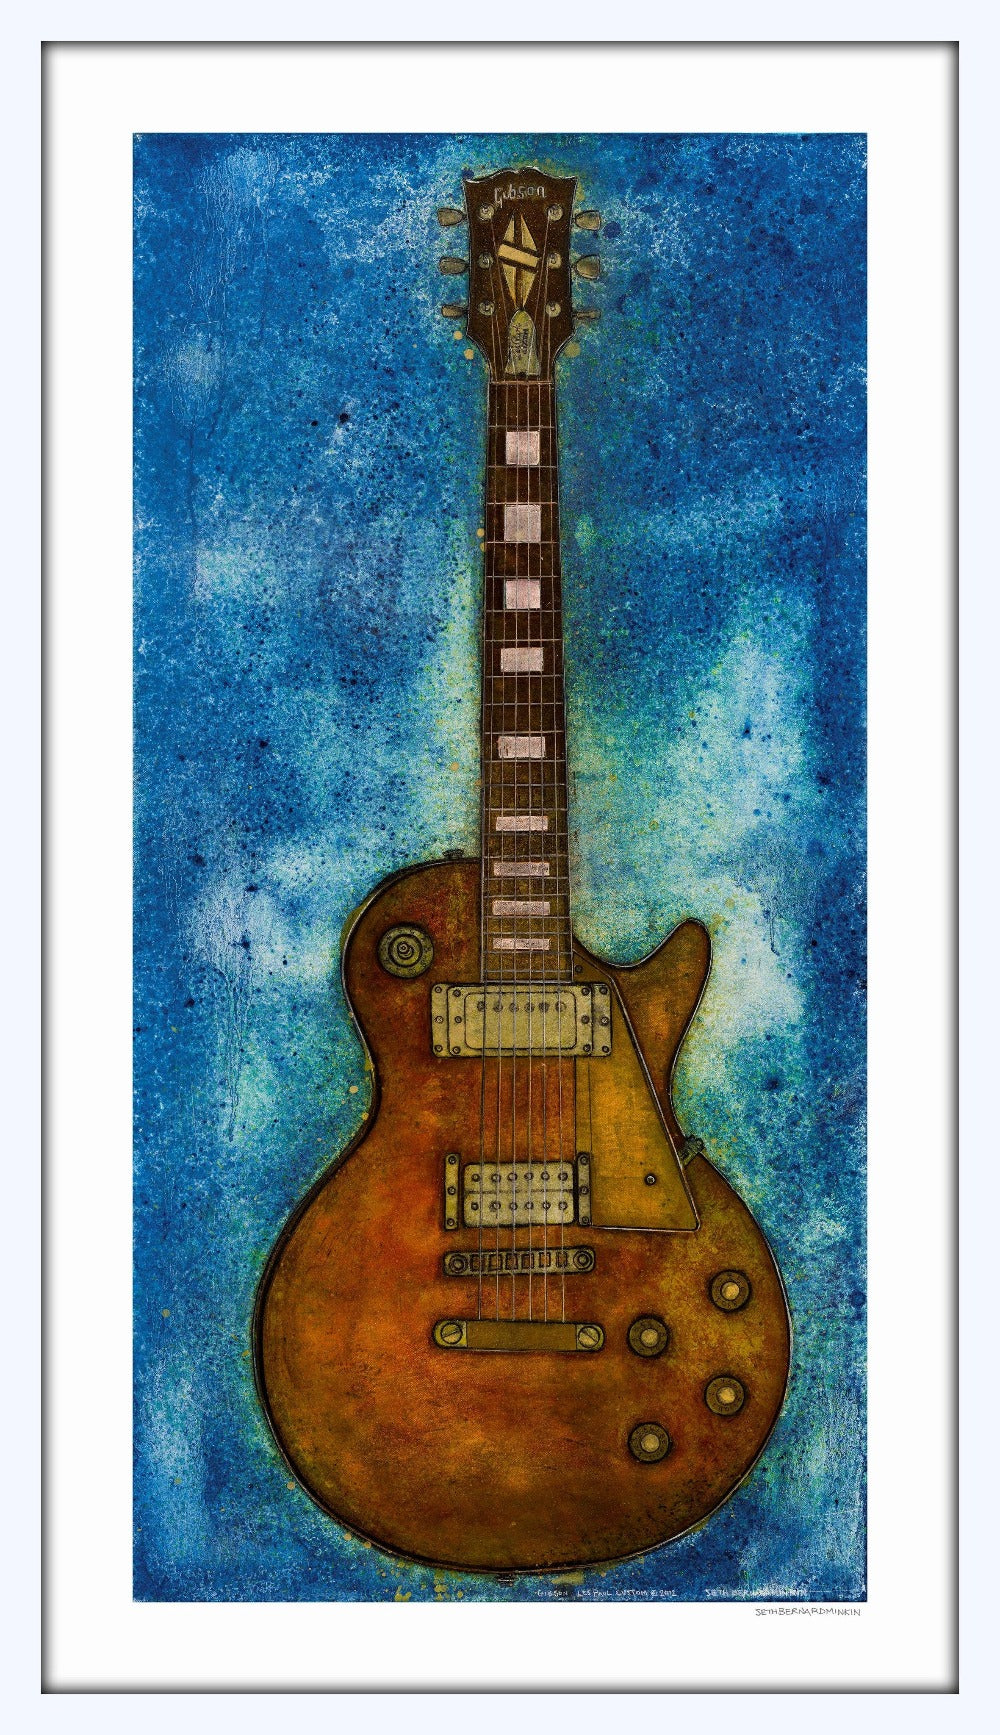 Gibson Les Paul Custom limited edition print by Seth B. Minkin